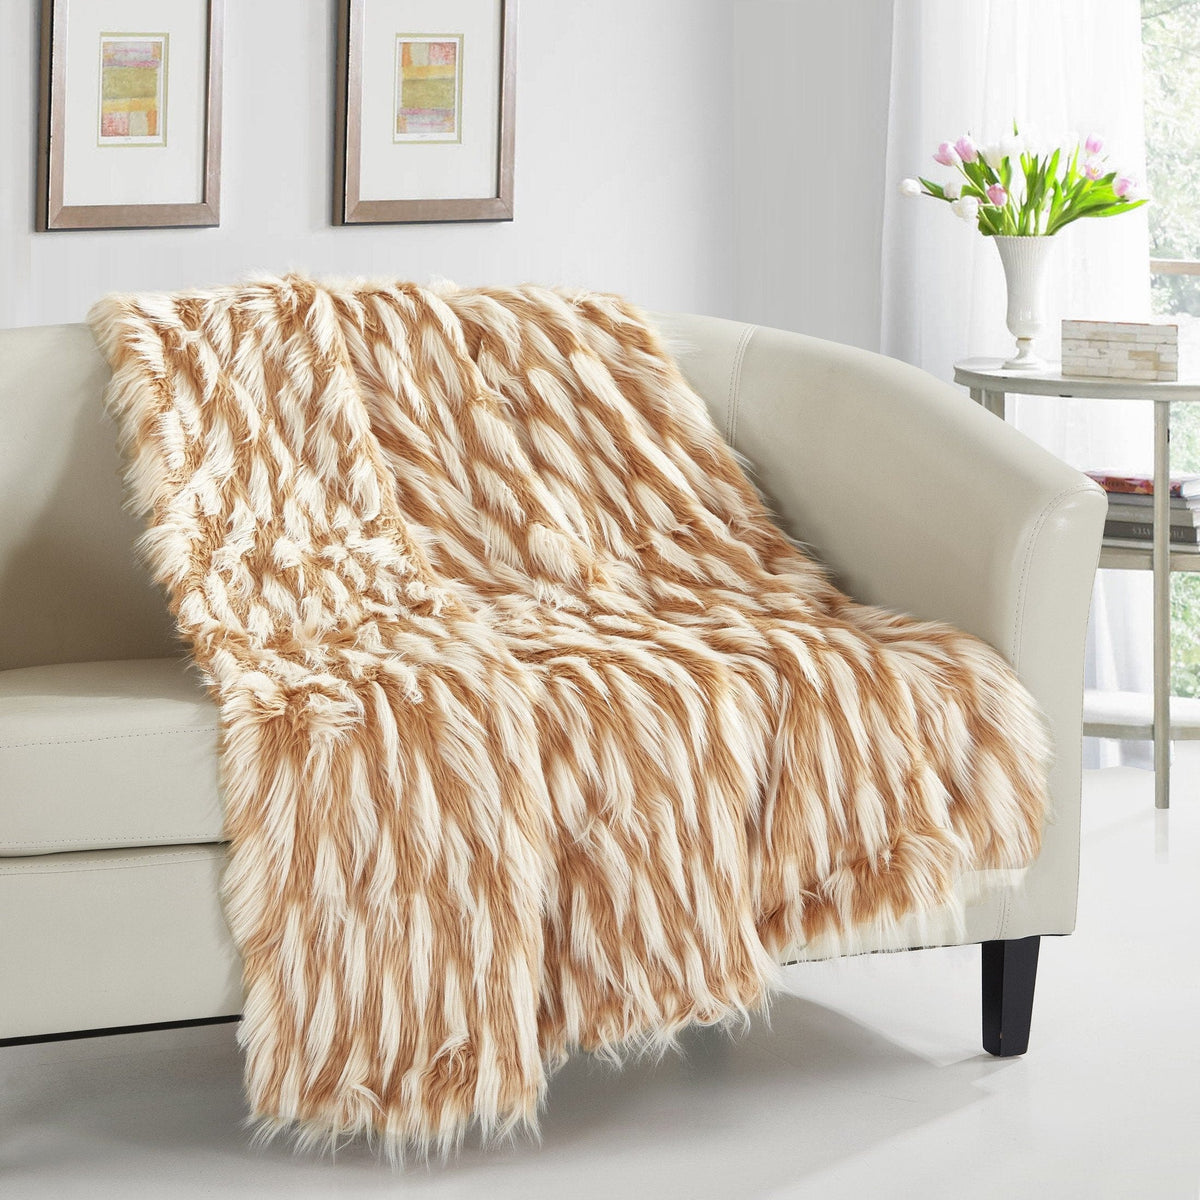 Chic Home Aviva Throw Blanket Cozy Super Soft Ultra Plush Two Tone Design Camel